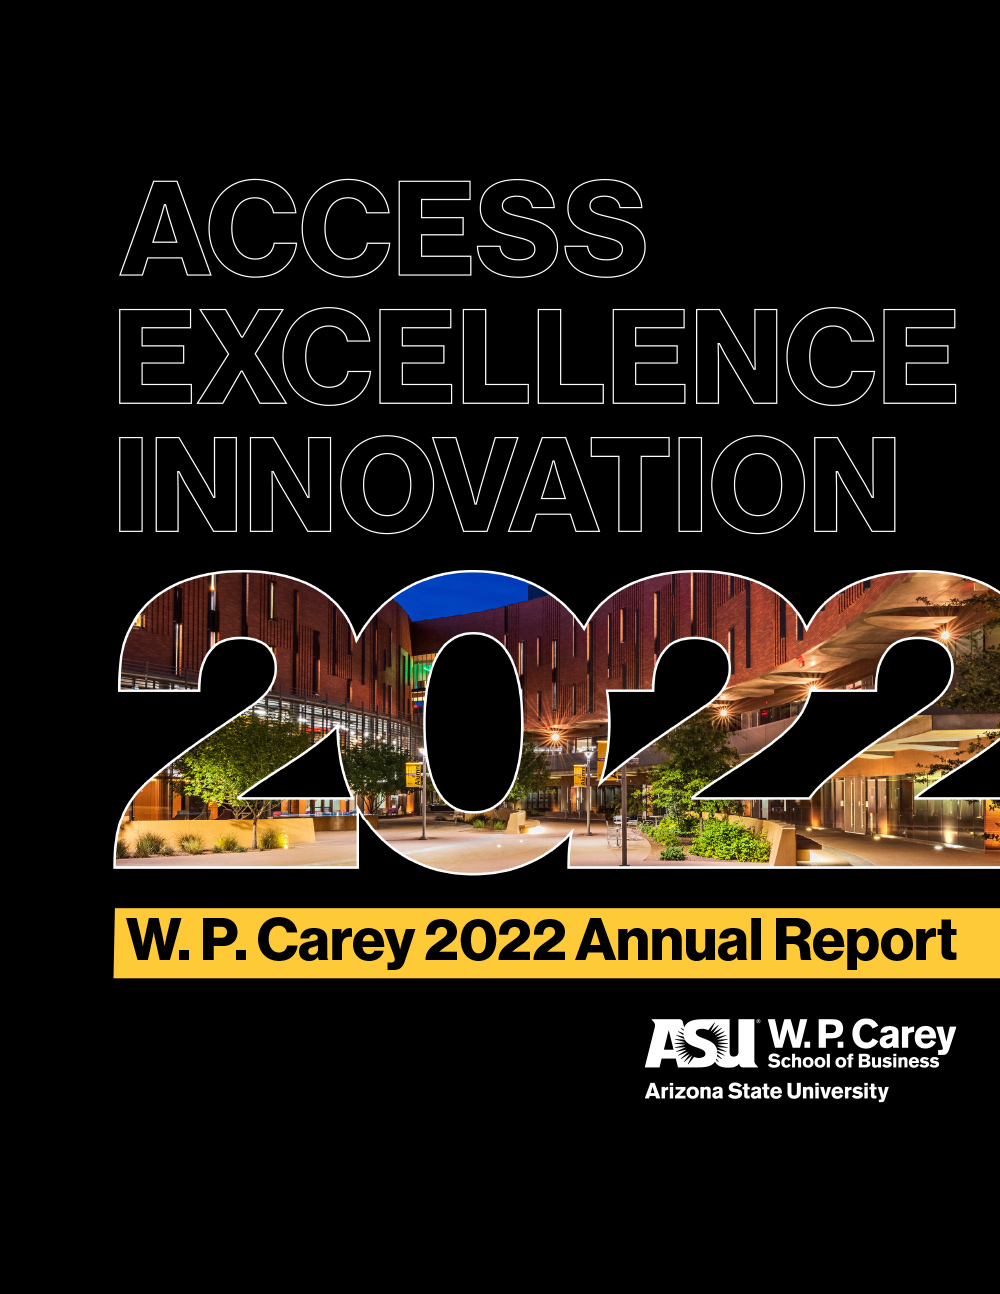 W. P. Carey 2022 Annual Report cover